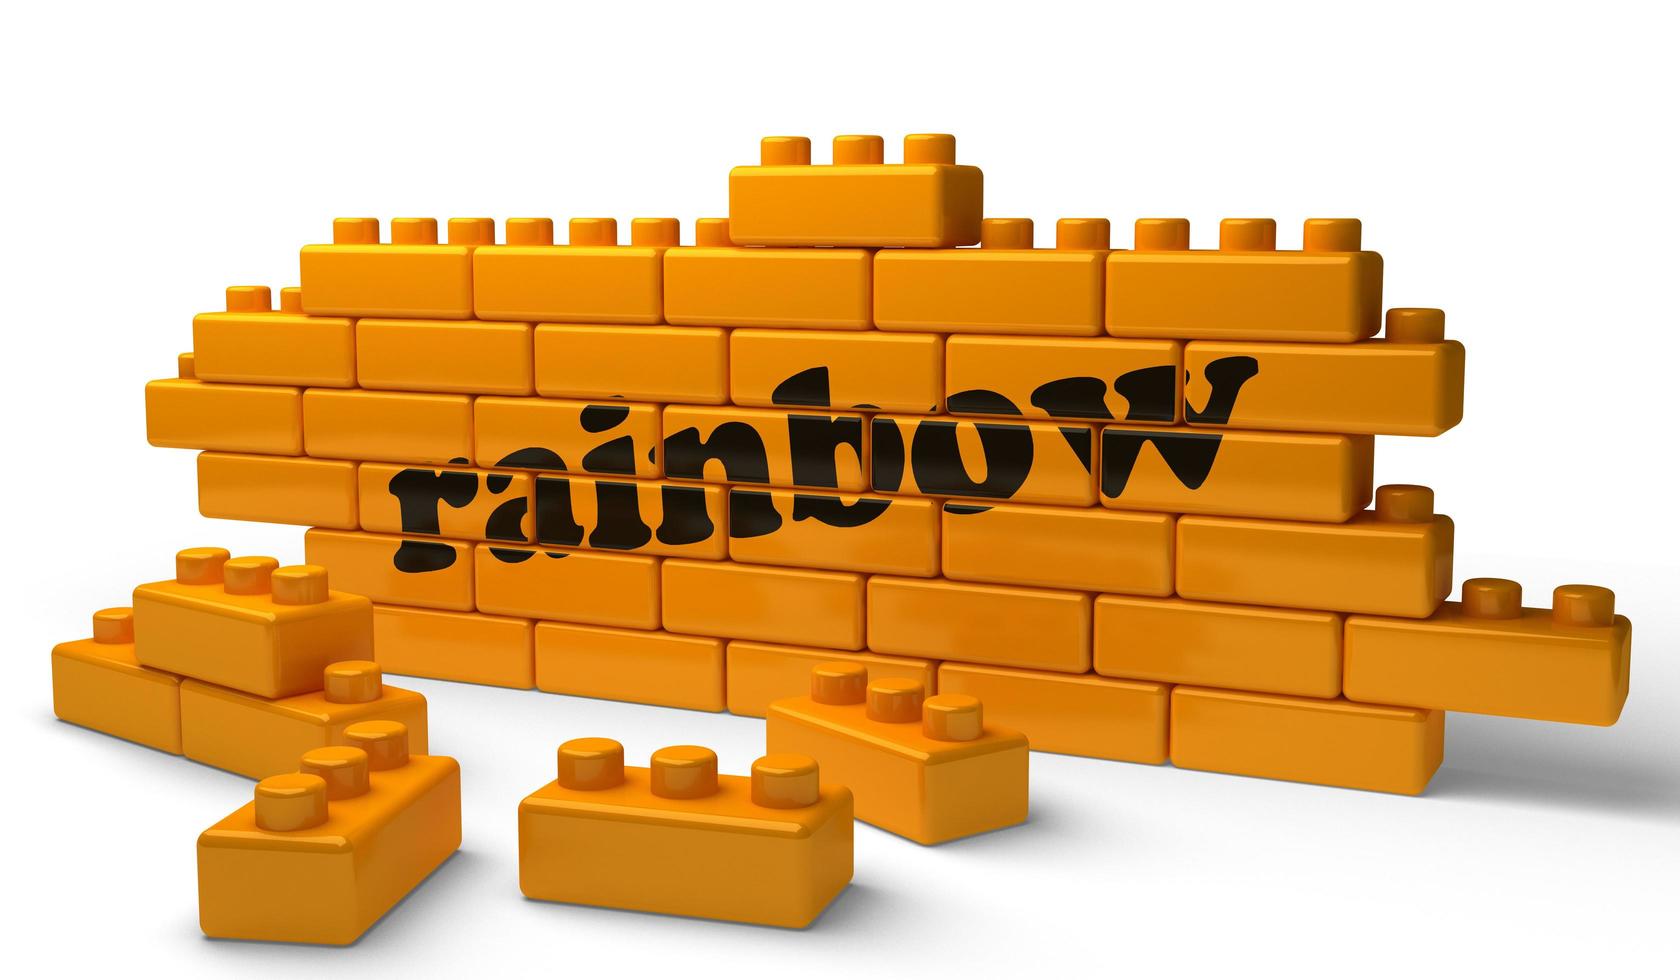 rainbow word on yellow brick wall photo